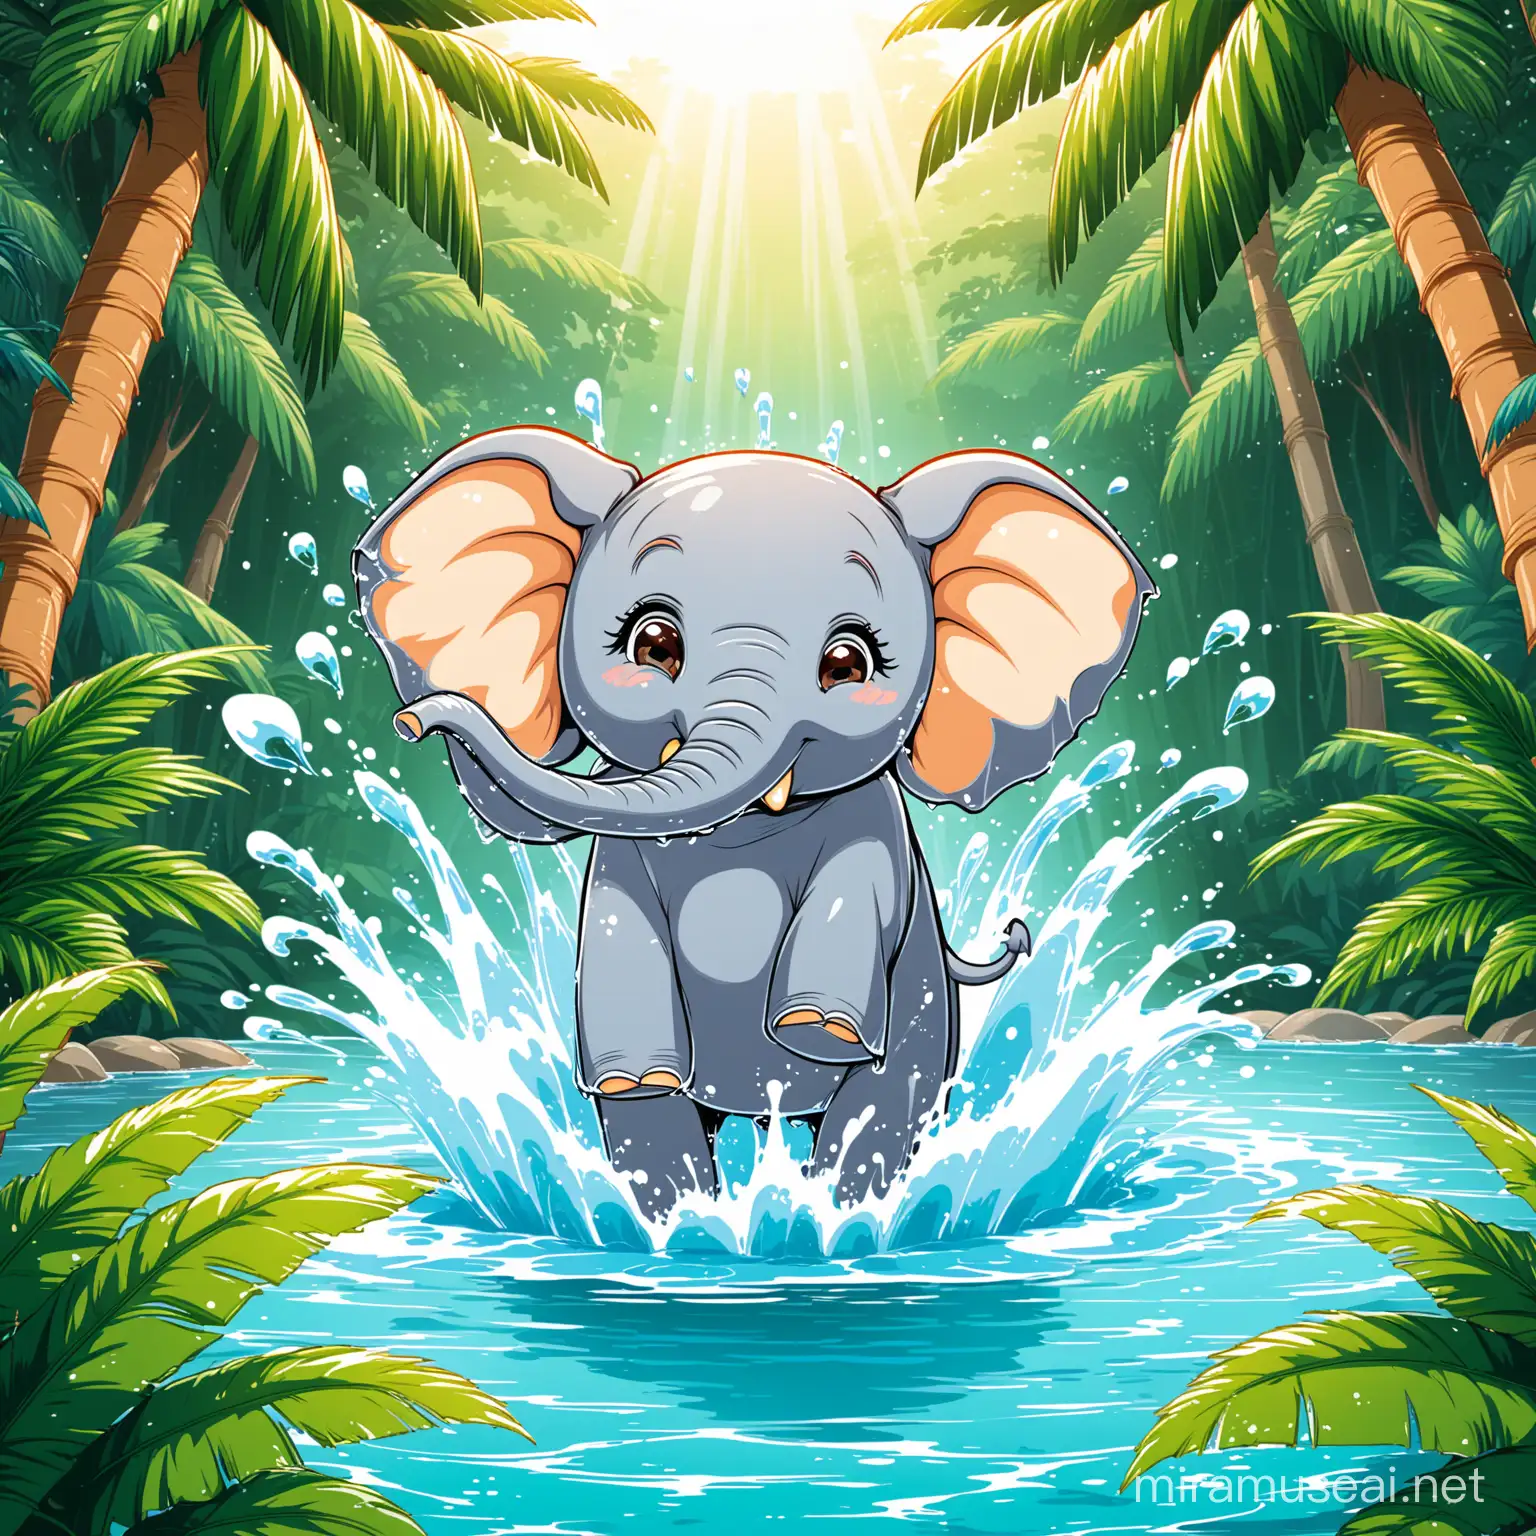 Jungle Elephant Playfully Splashing Water in Cartoon Style